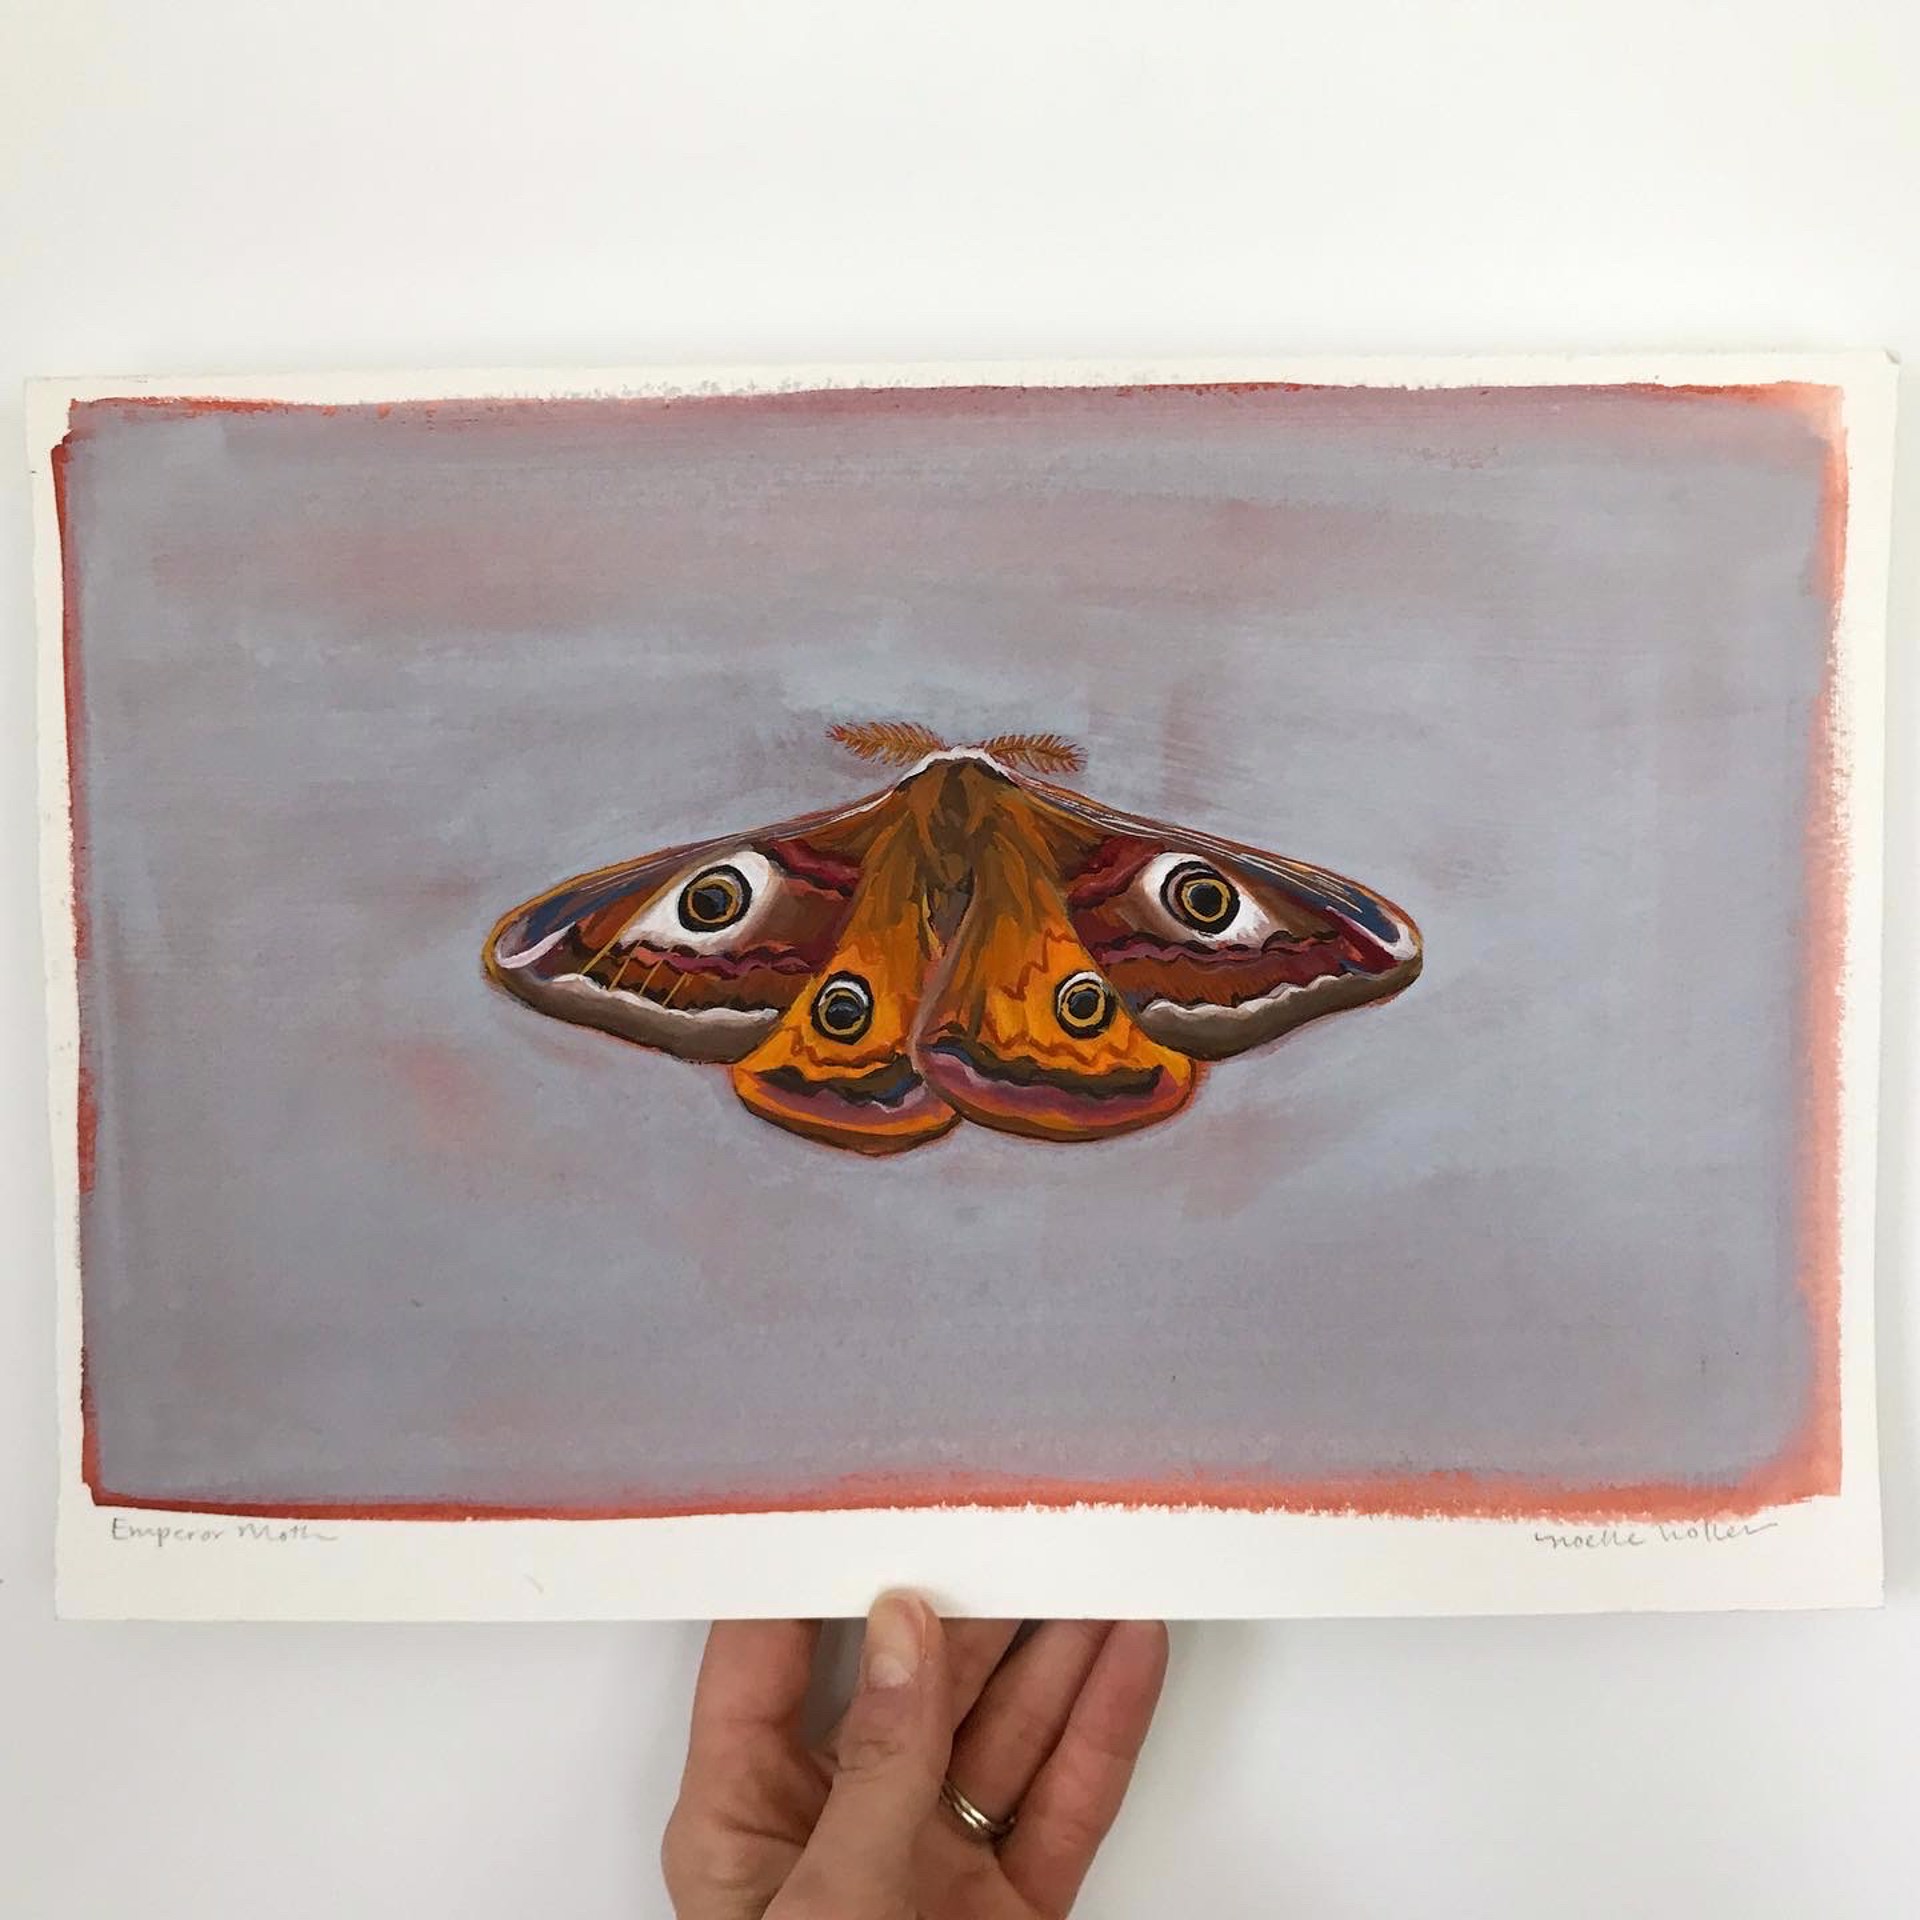 Emperor Moth by Noelle Holler